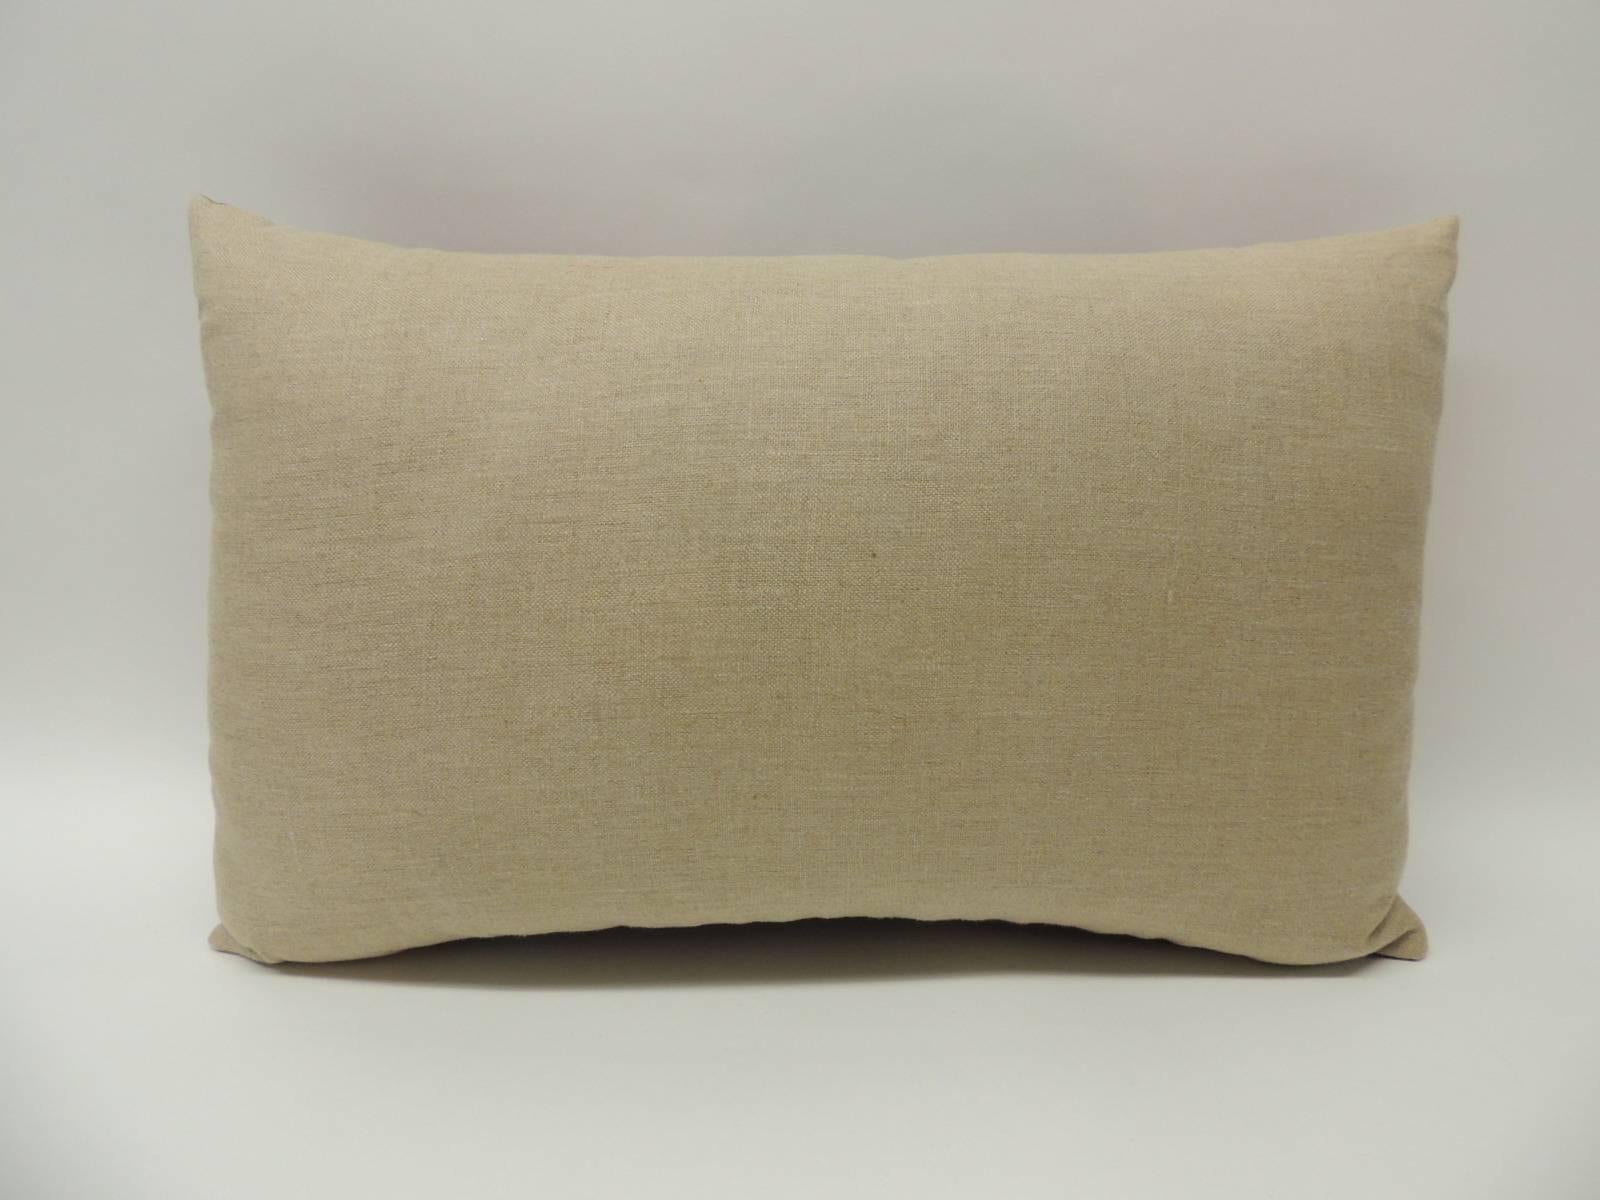 Moorish 19th Century Persian Red Cotton Decorative Bolster Pillow